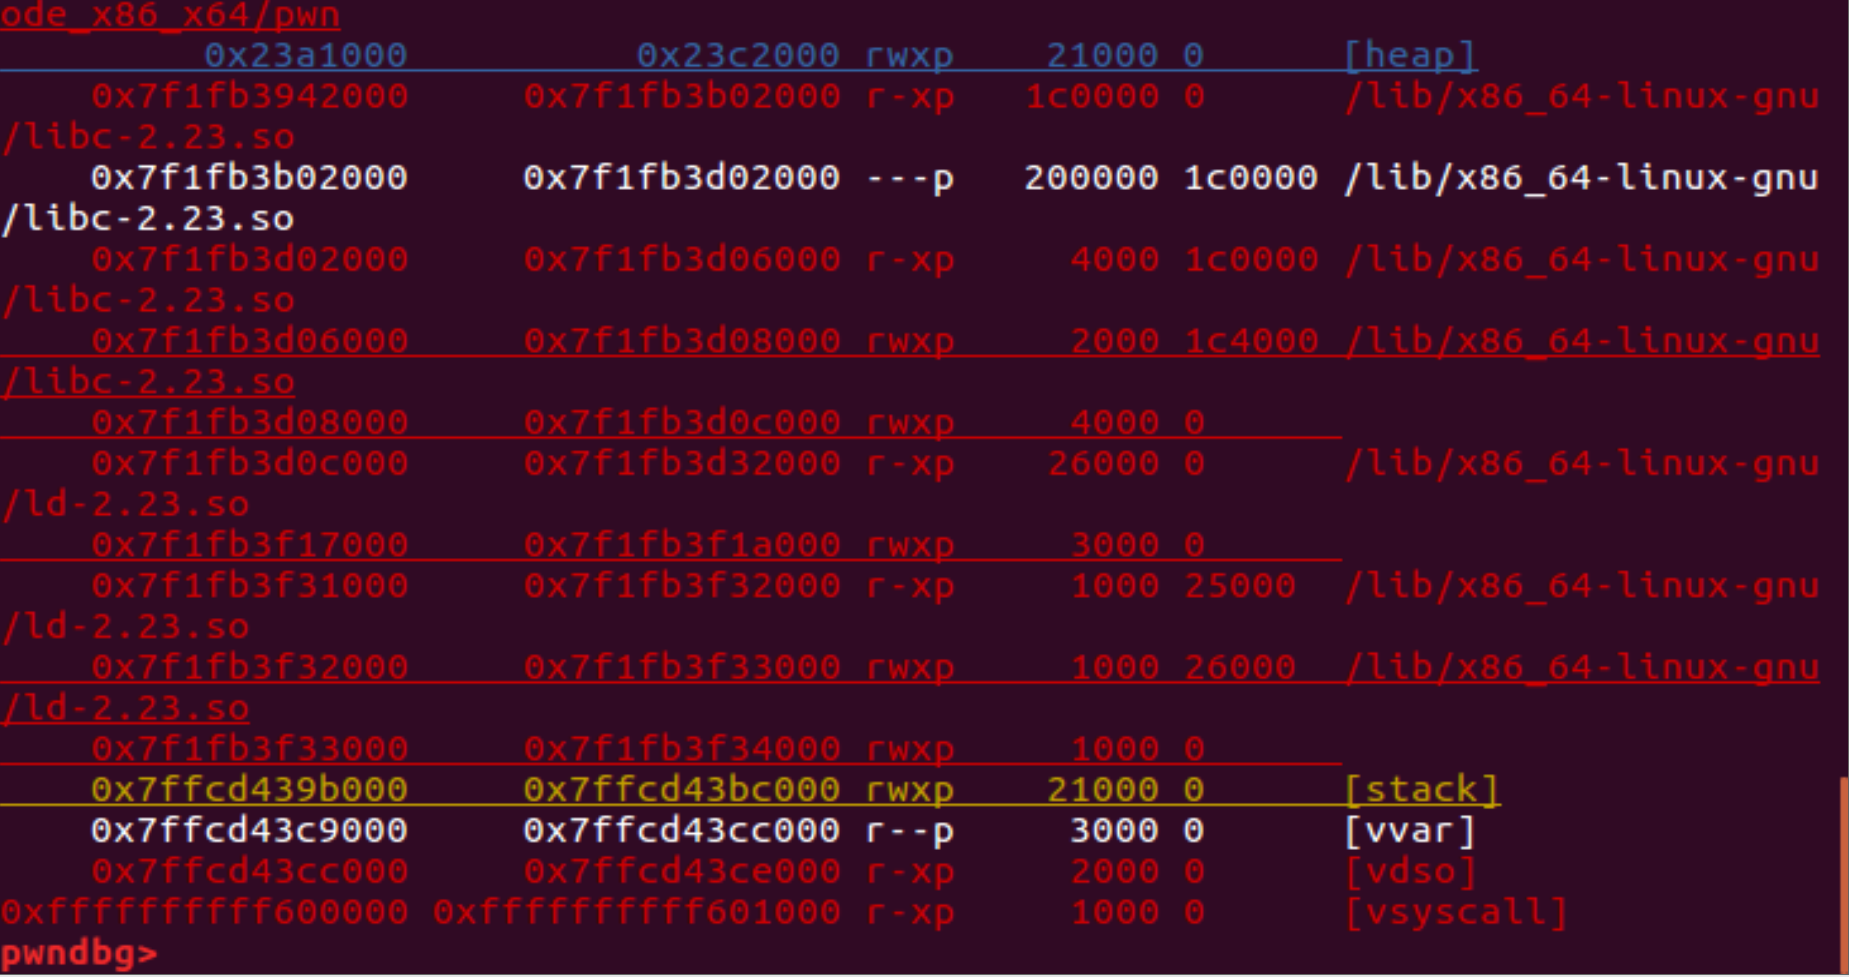 ASCII码-shellcode的技巧